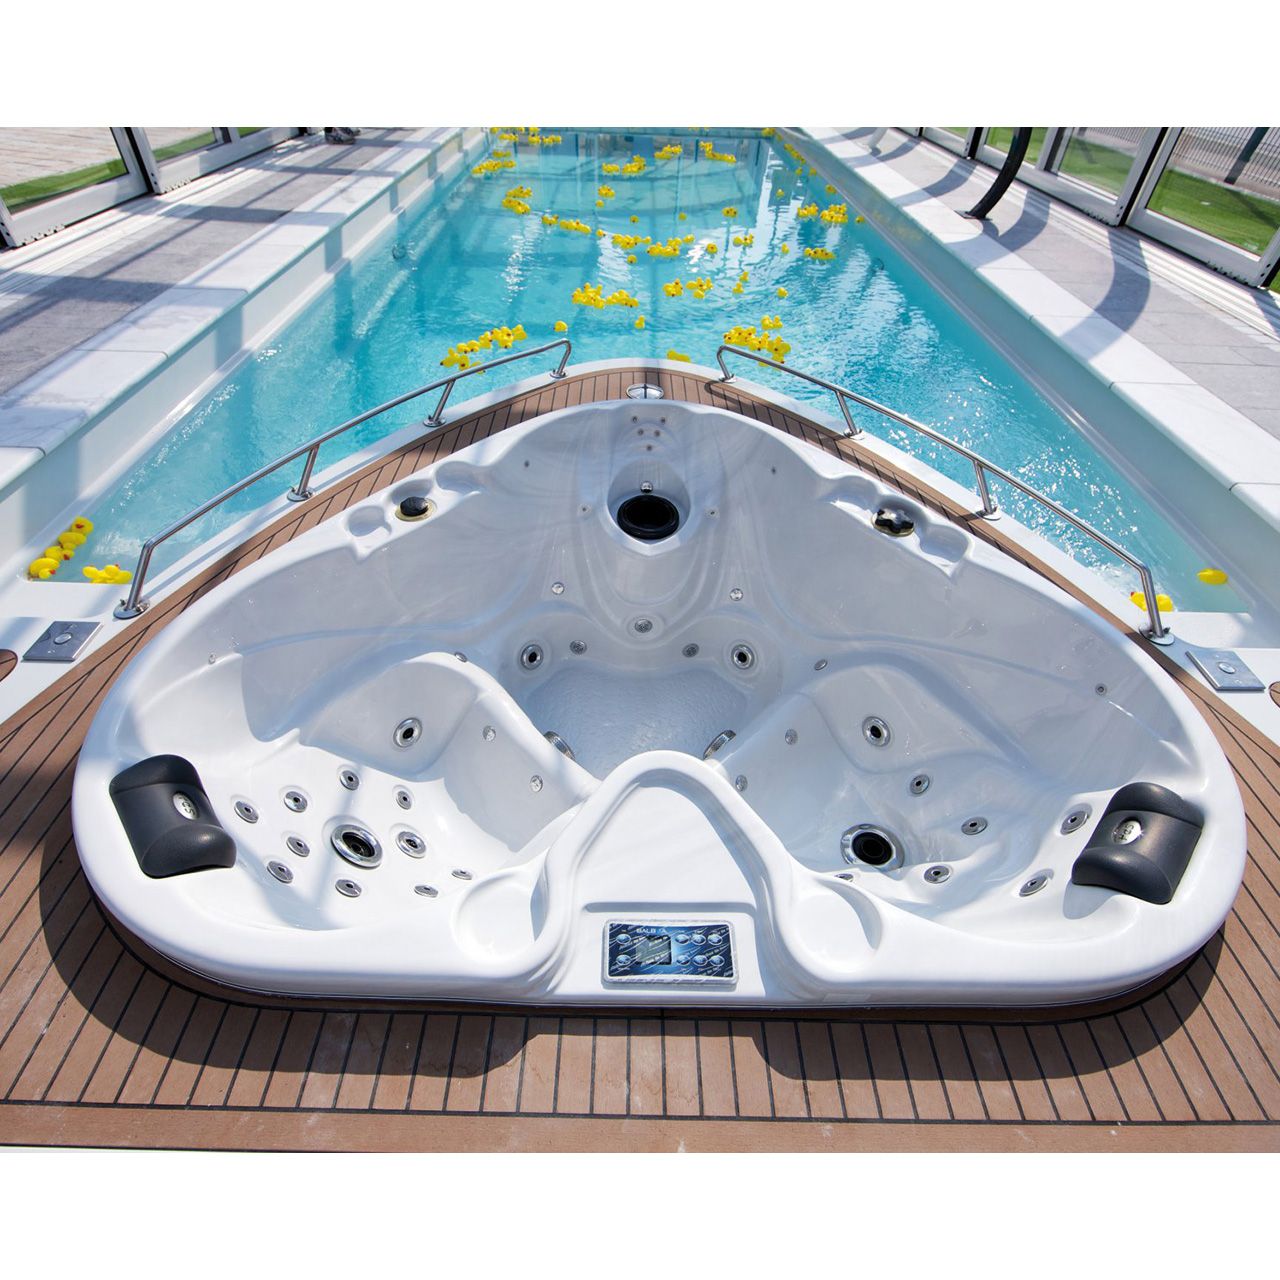 Compass Carbon Ceramic Schwimmbecken Yacht Pool 11,54mx4,04mx1,50m